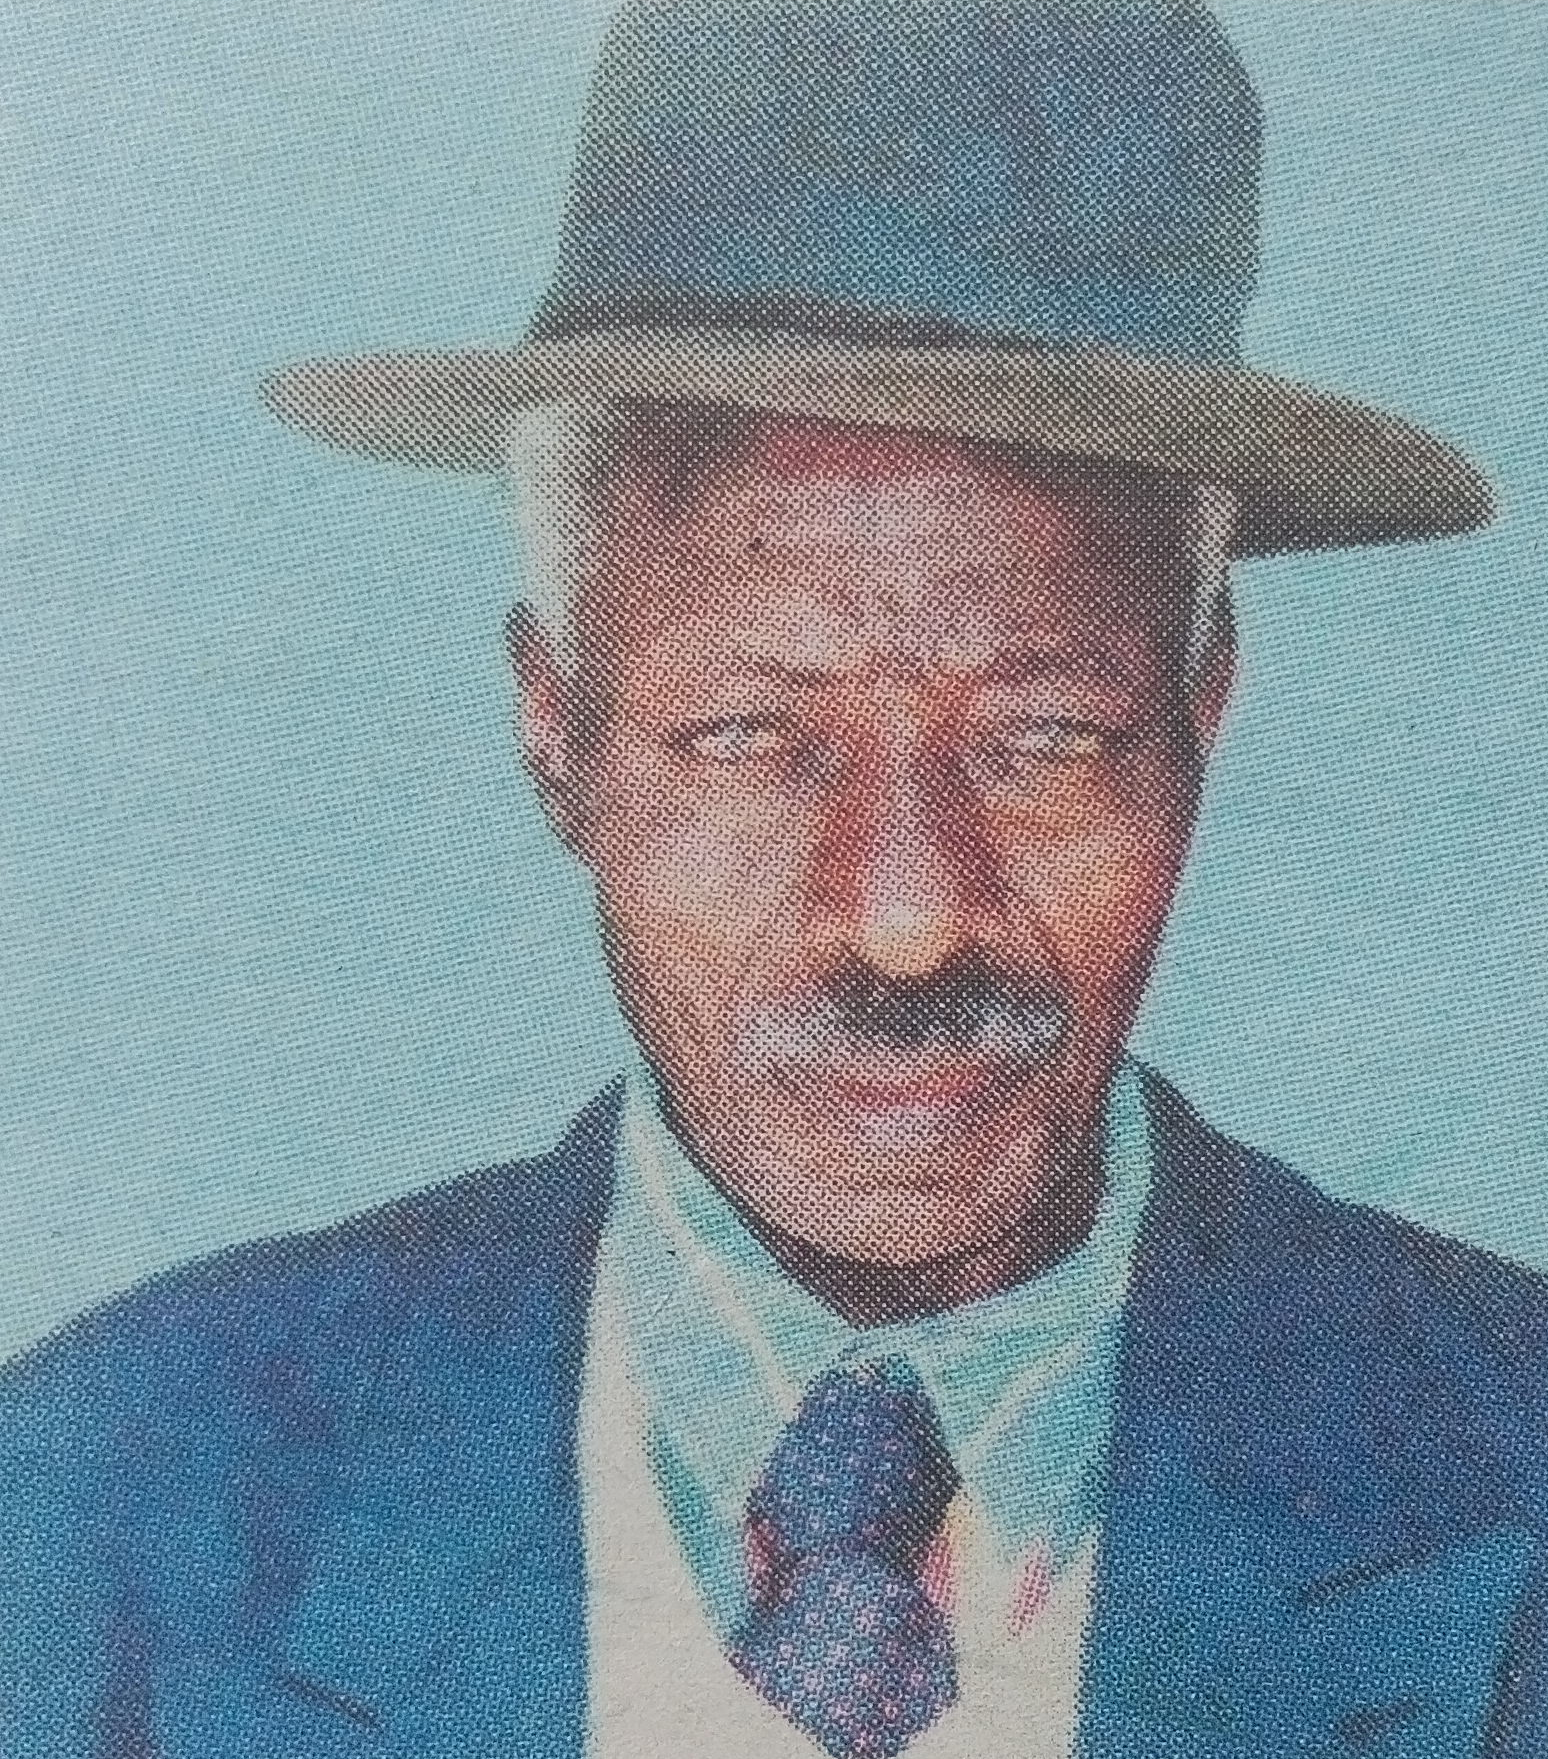 Obituary Image of Samuel Waweru Kanyoro (Wamunyoro)